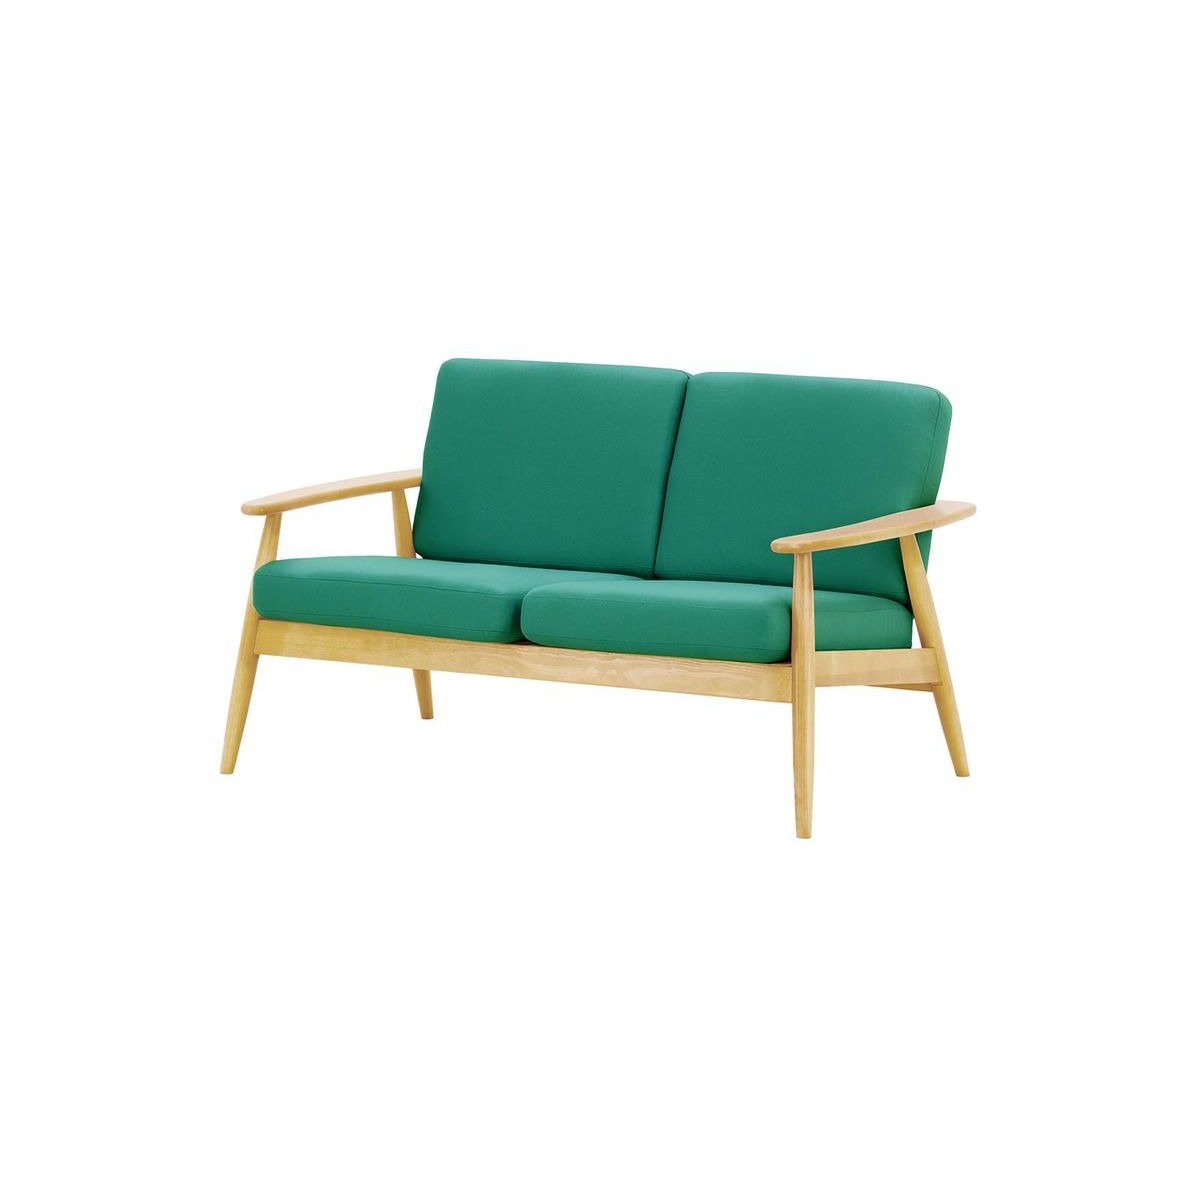 Demure Aqua 2 Seater Garden Sofa, turquoise, Leg colour: 8001 like oak - image 1